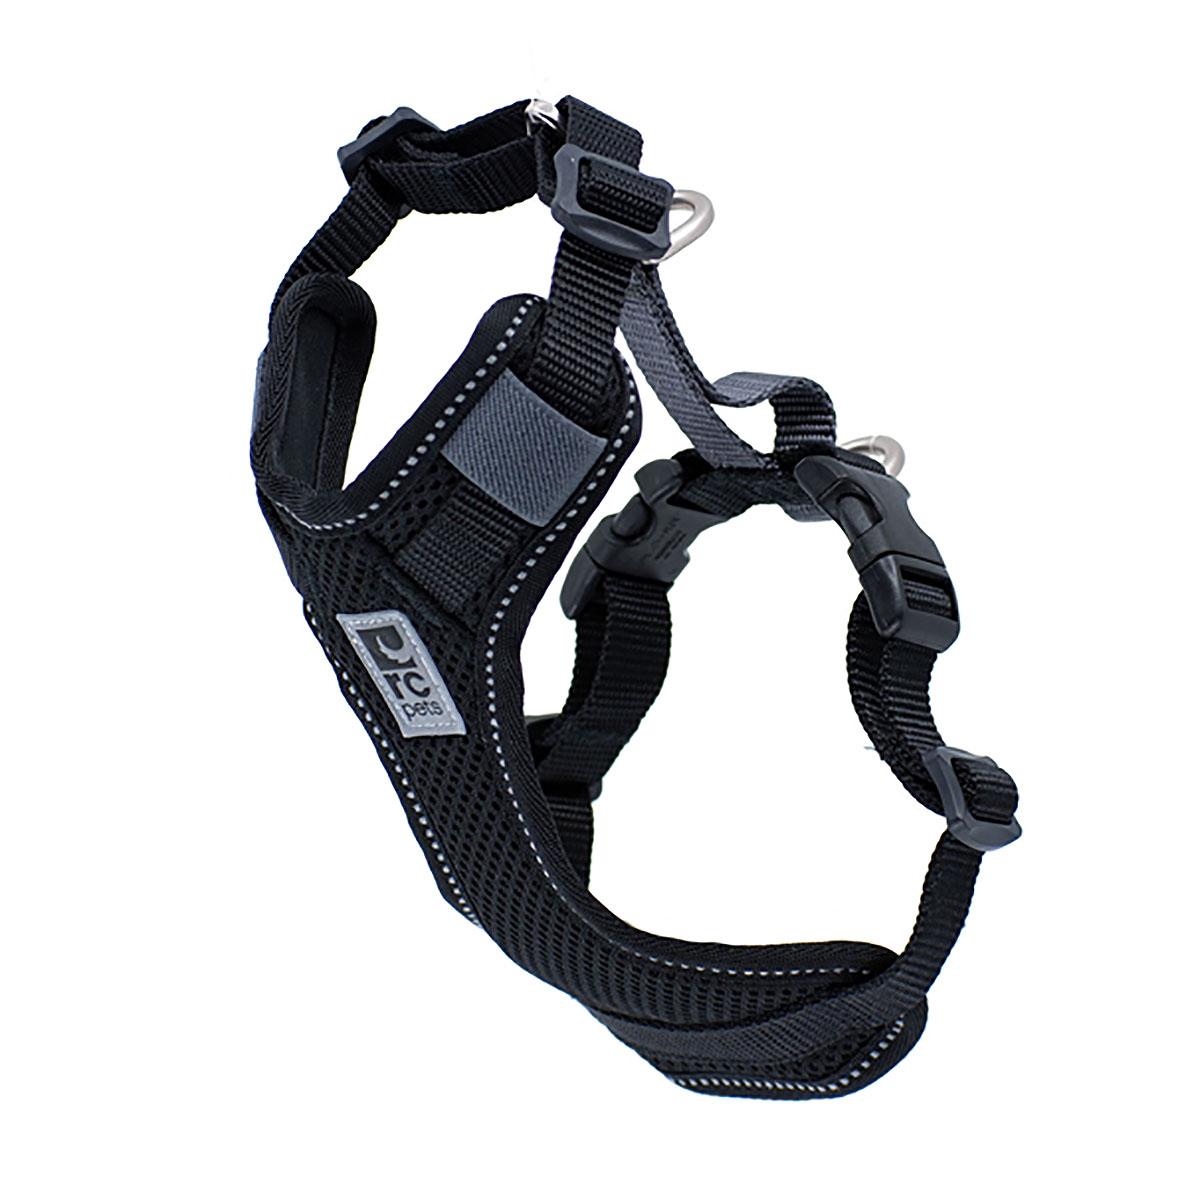 Moto Control Dog Harness - Black/Grey